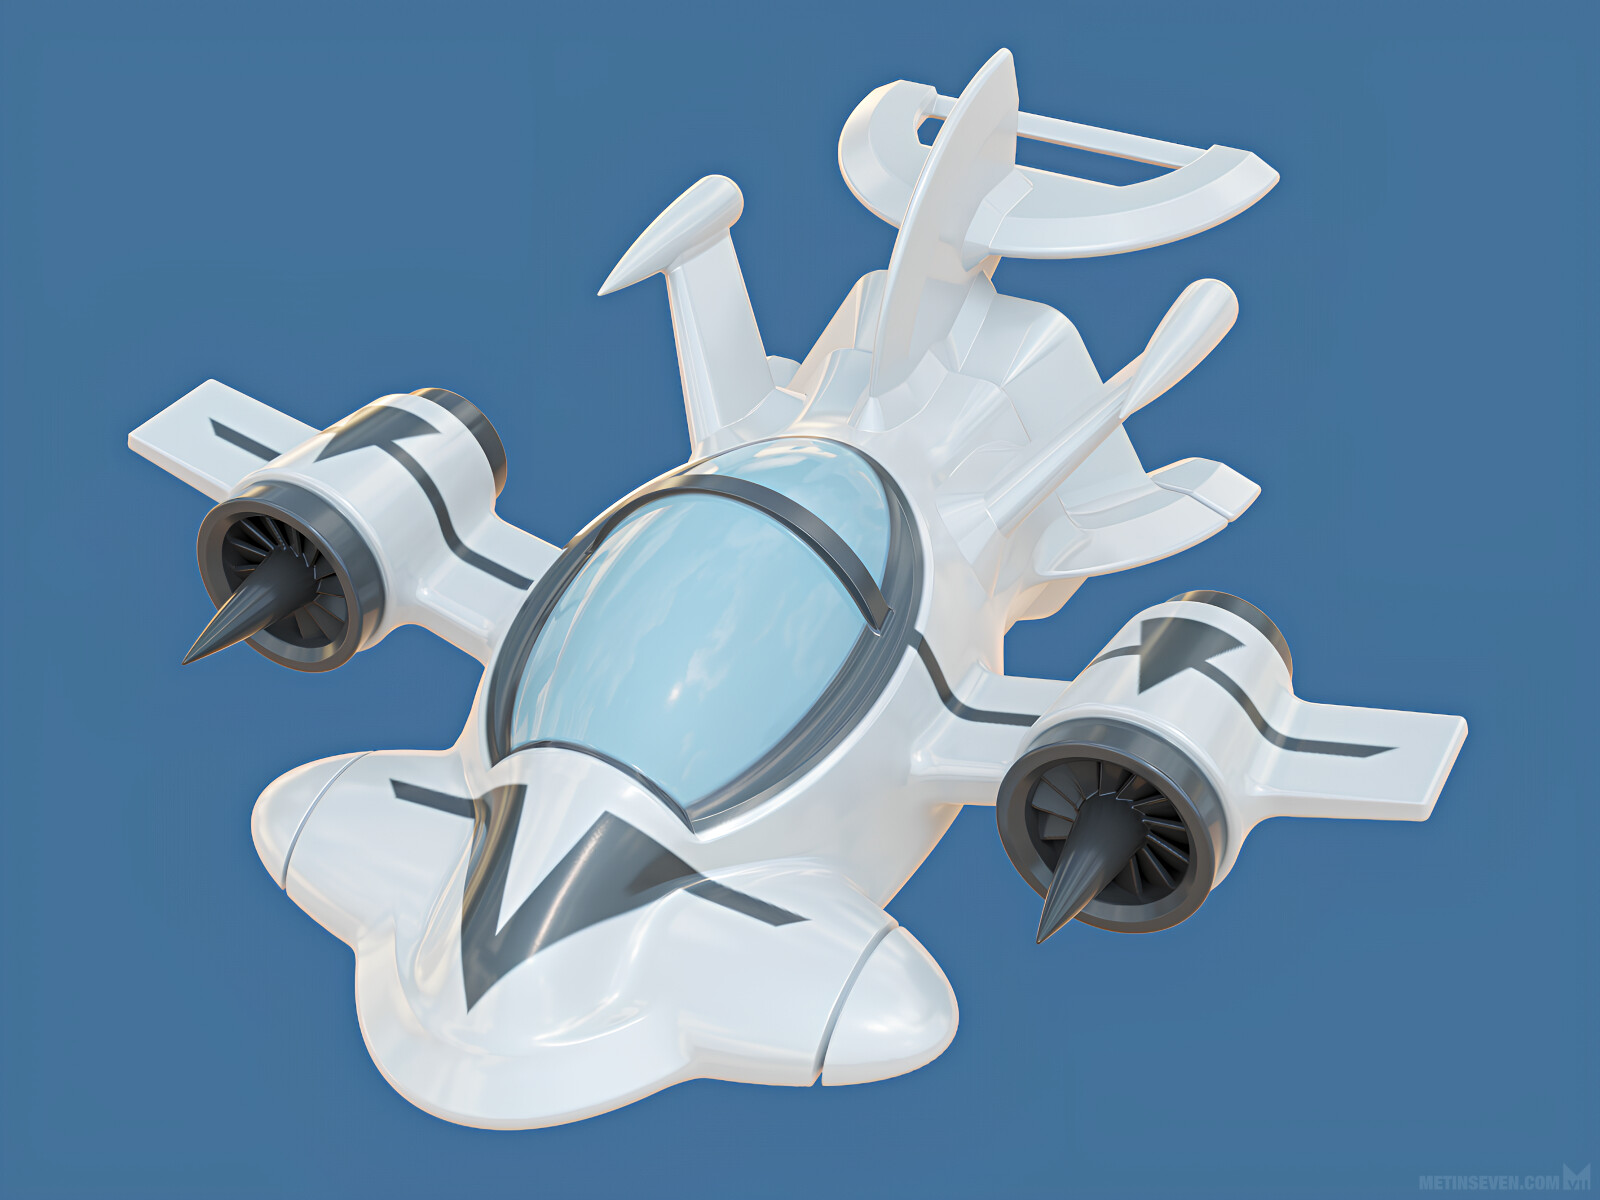 Sci-fi aircraft / spacecraft / submarine concept